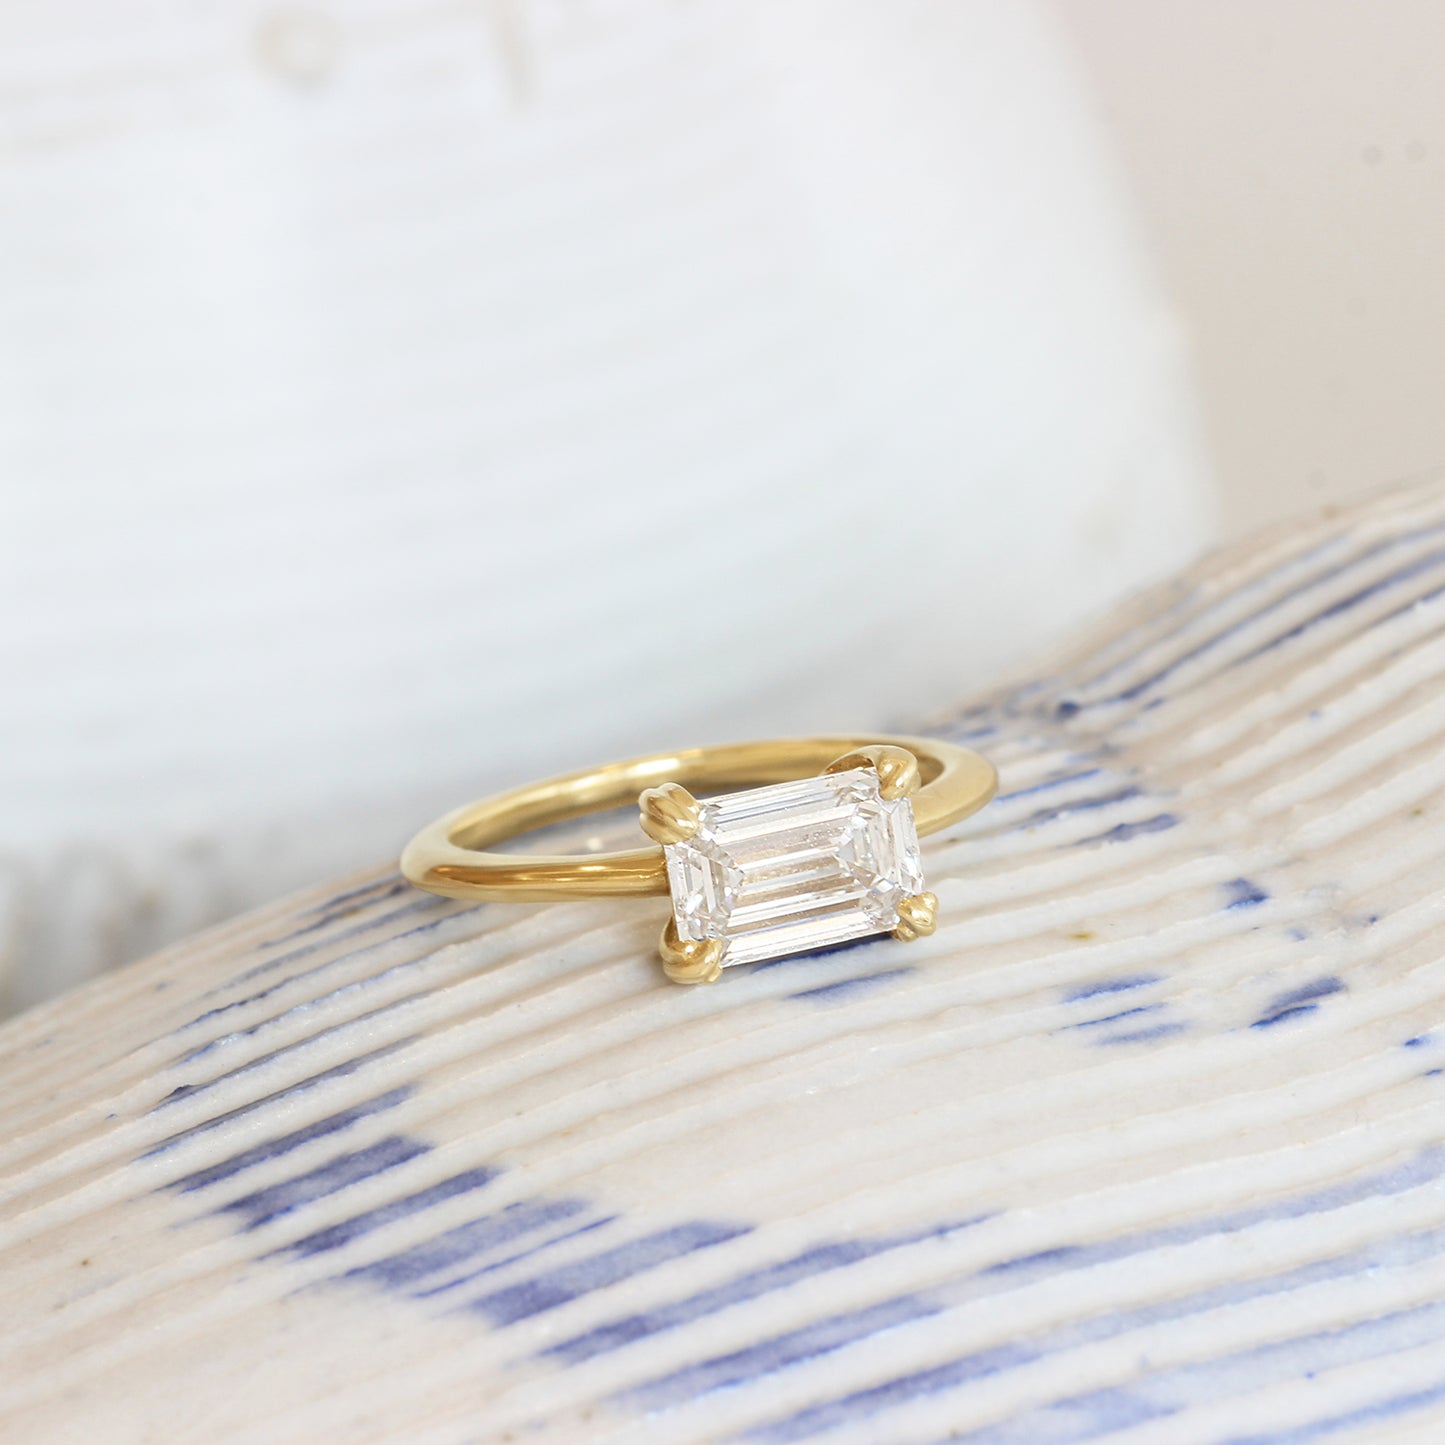 Cornice Ring / Lab Emerald Cut Diamond by Goldpoint